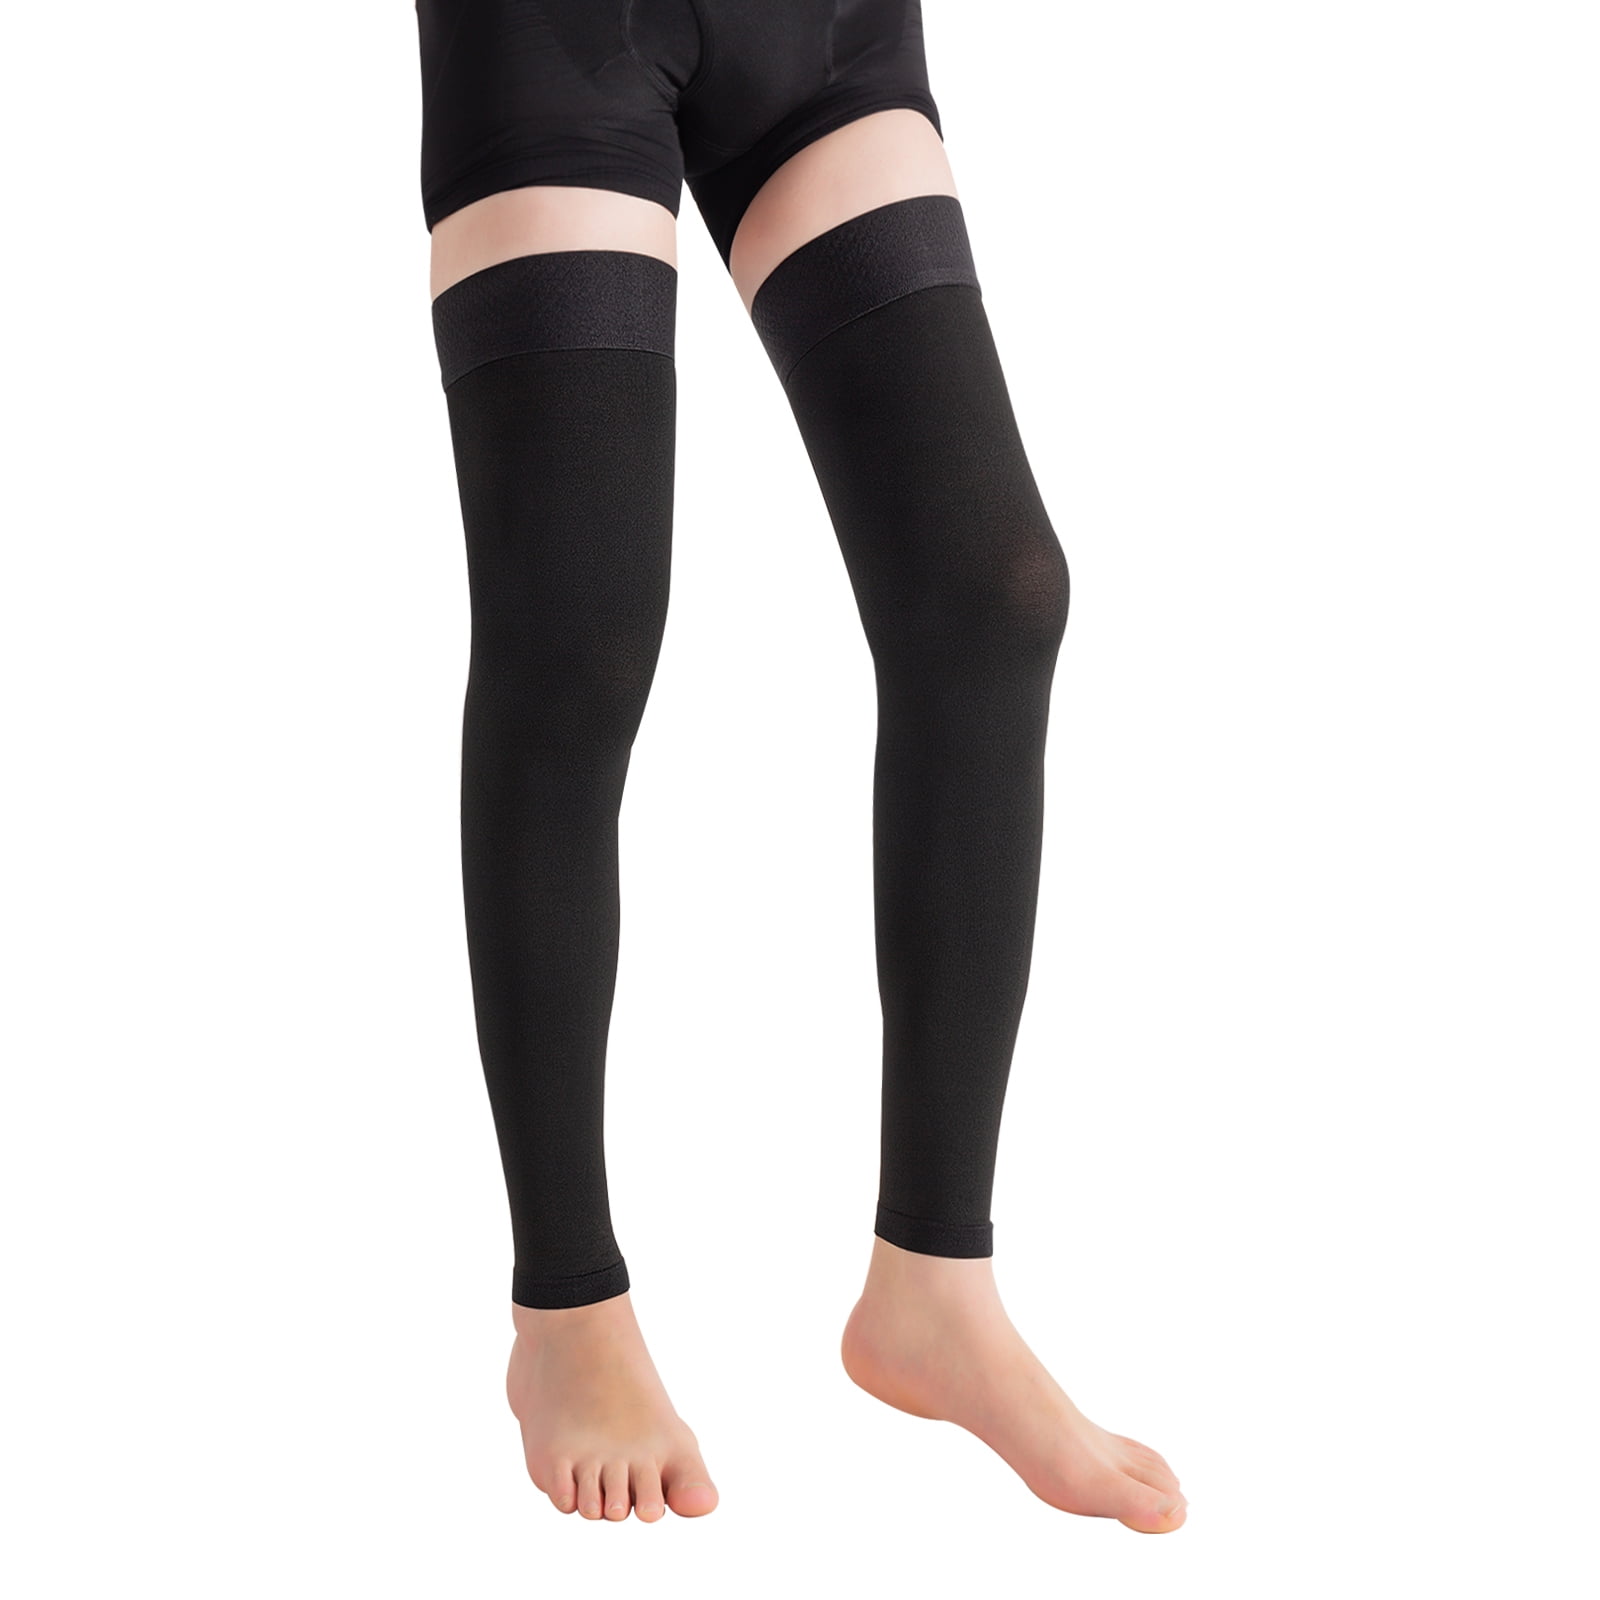 Hehanda Footless Compression Socks for Women & Men(M-4XL), 20-30 mmHg ...